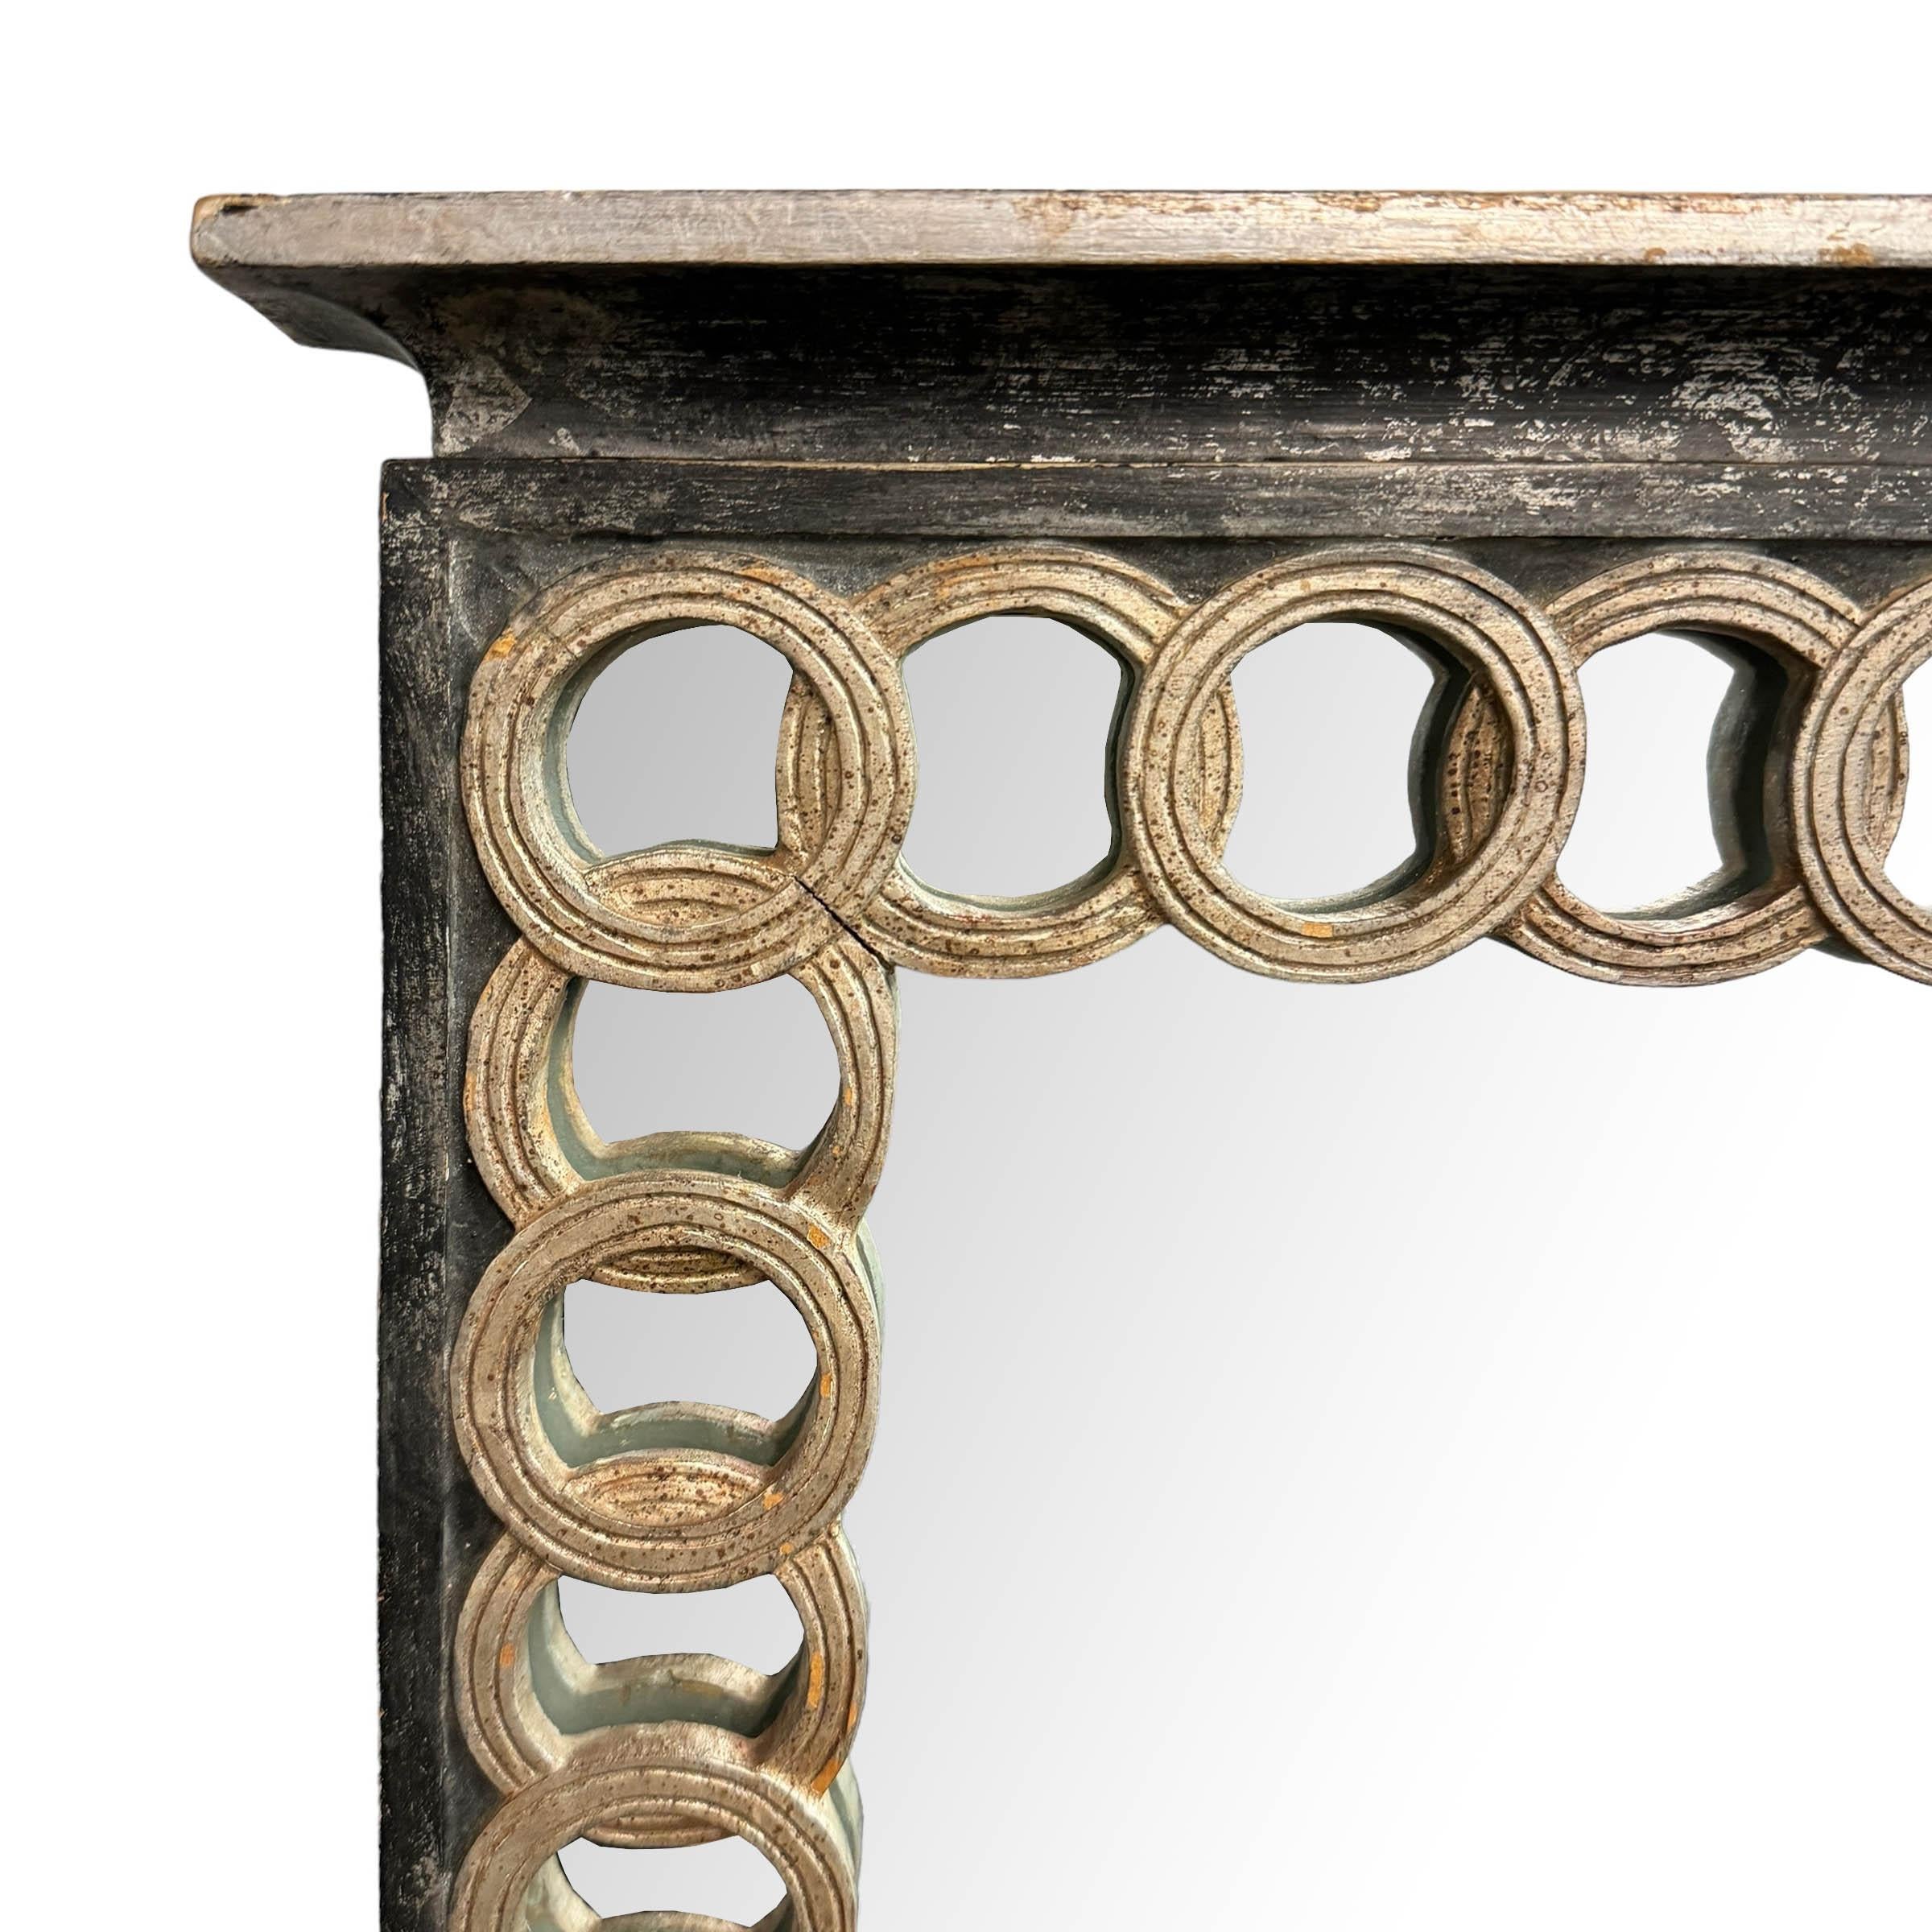 Giltwood Mid-20th Century Italian Mirror with Interlocking Rings